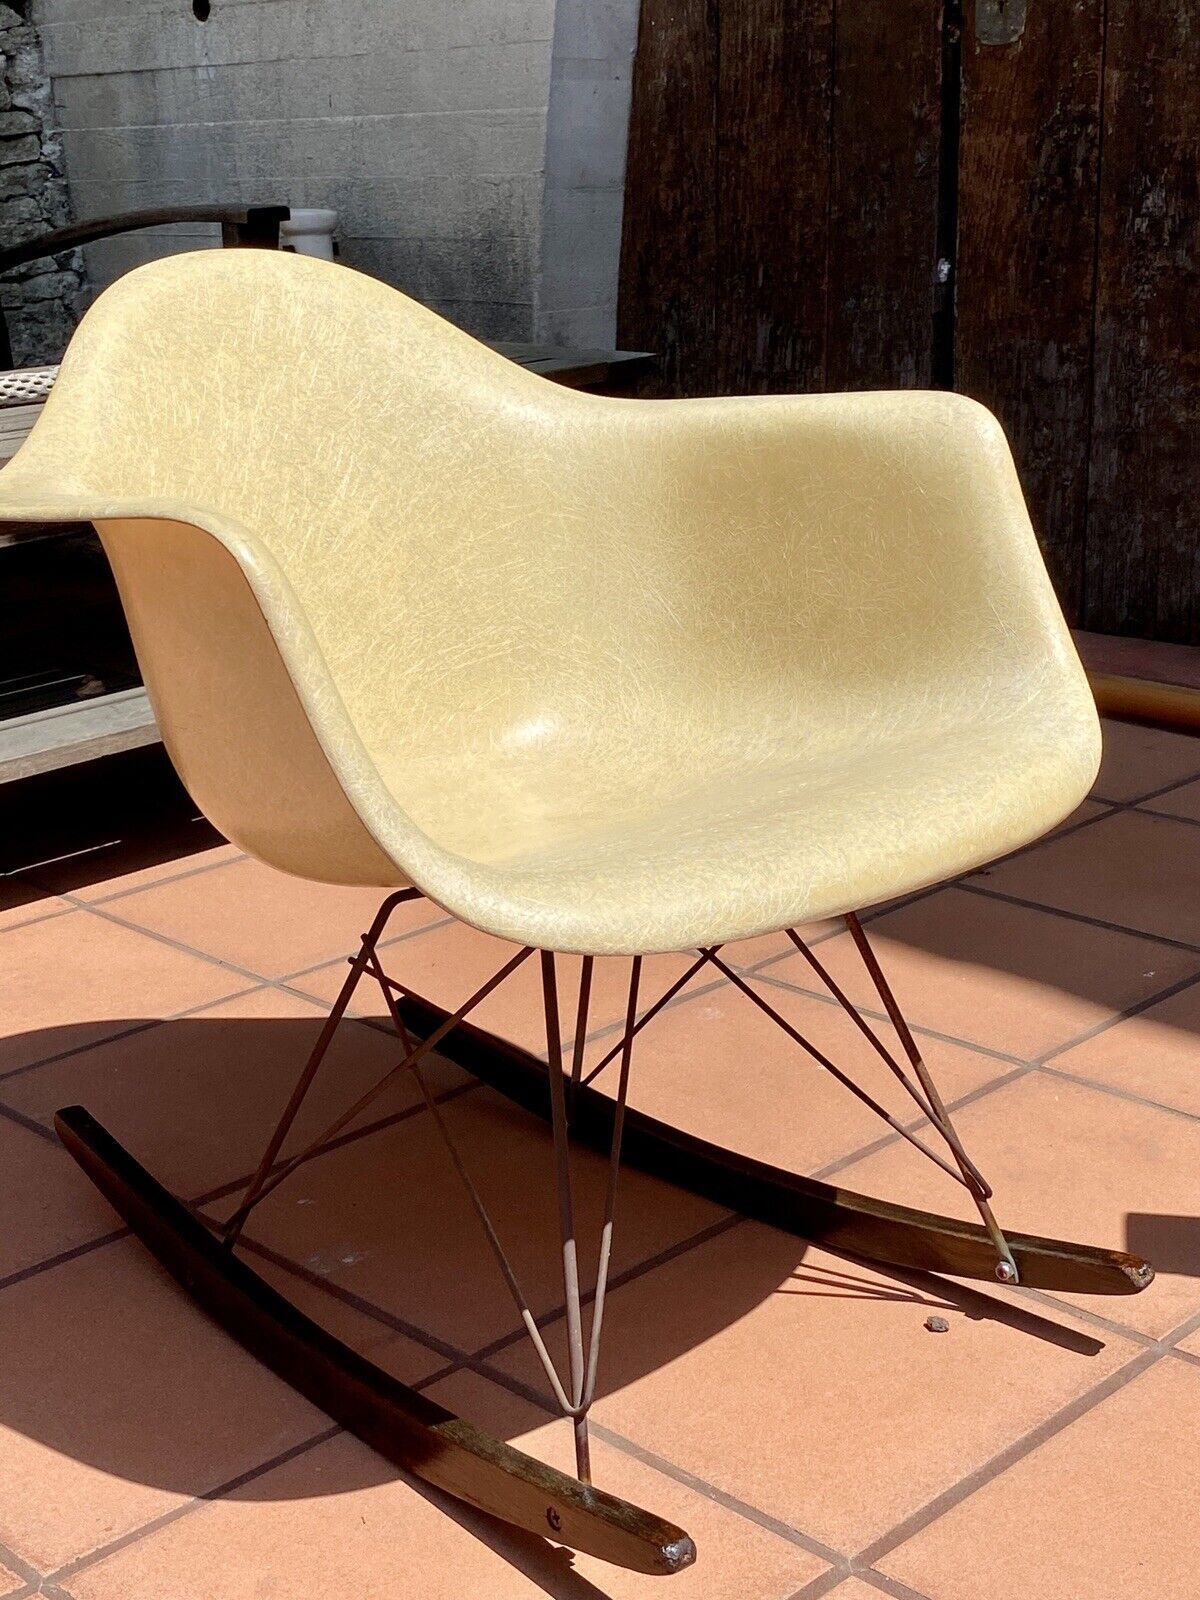 Marco Polo quagga Fyrretræ Vintage Eames Rocker Shell Chair - Herman Miller | eBay